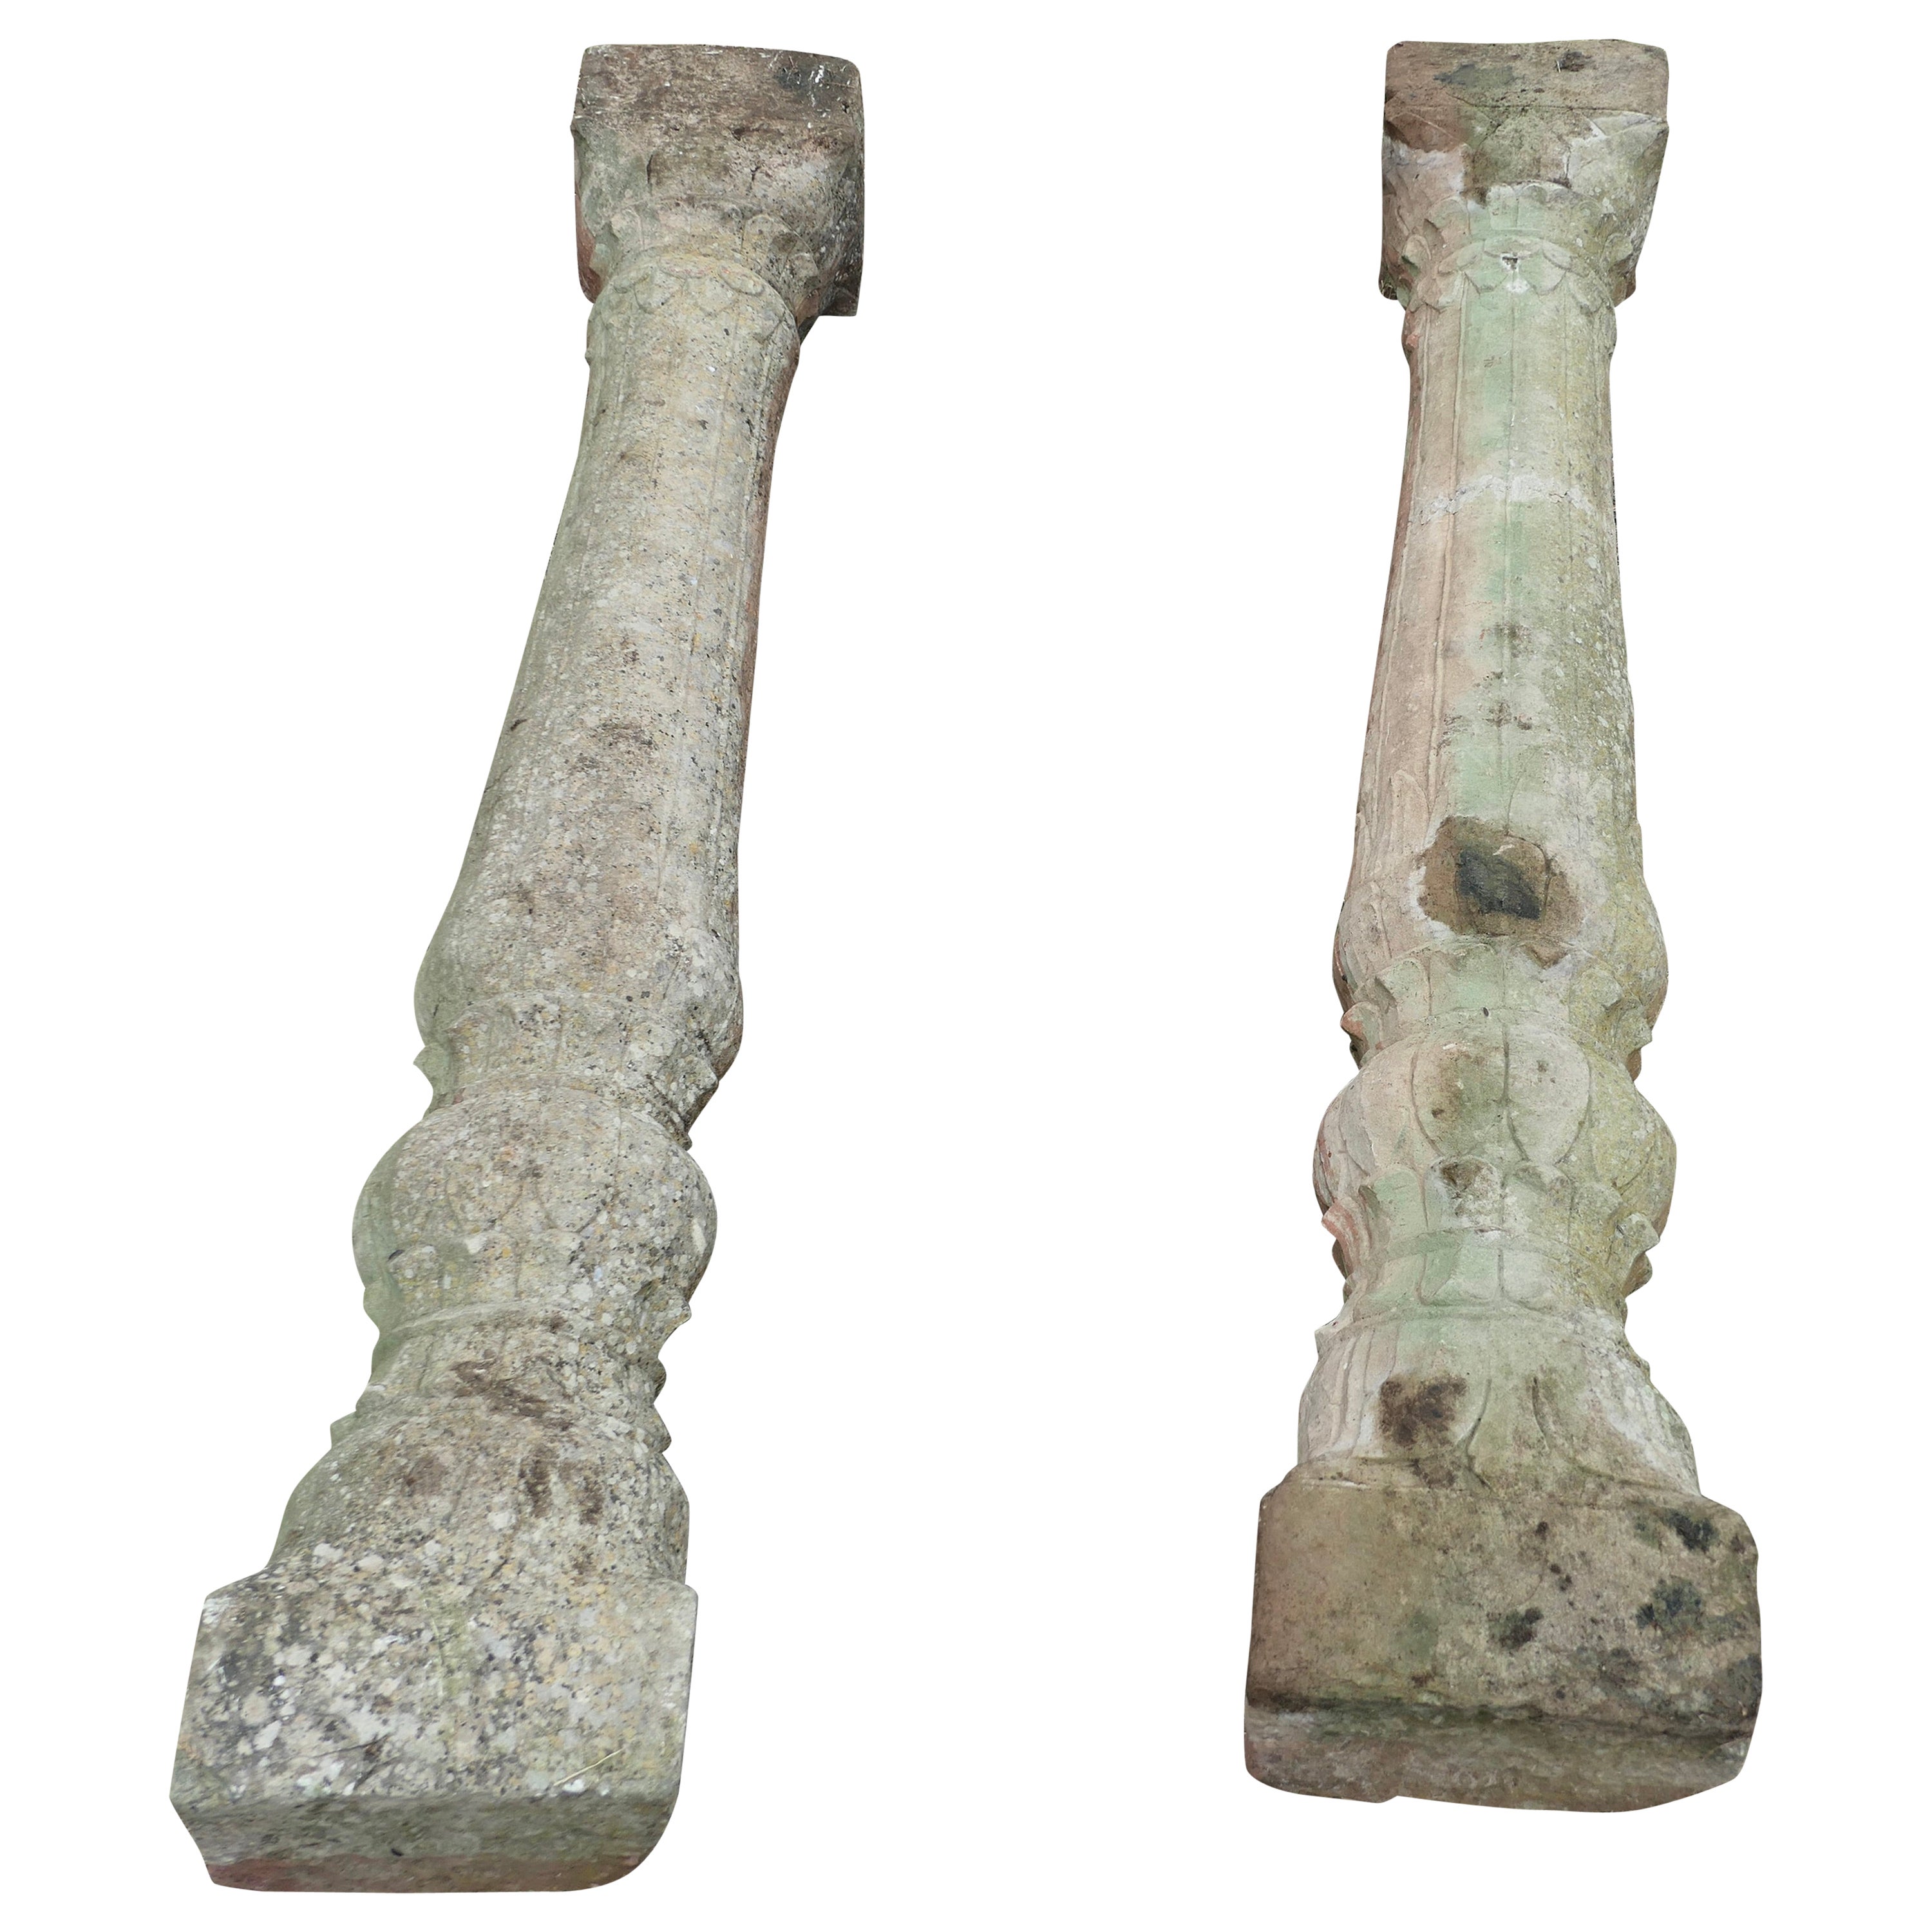 A Pair of Ancient Corinthian Type Stone Columns